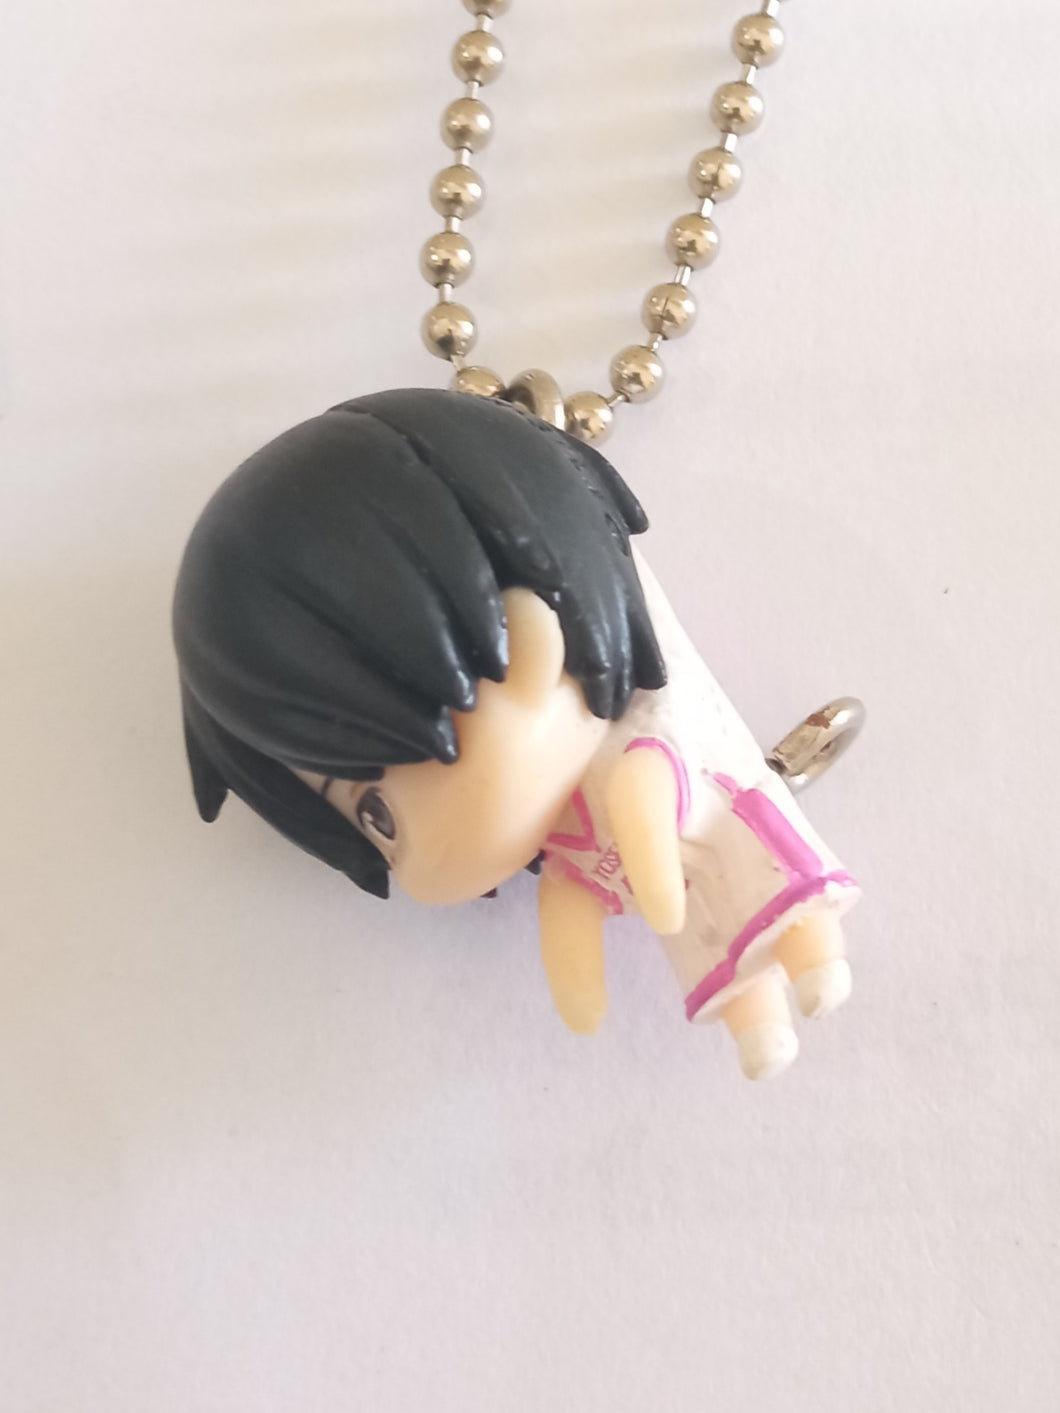 Kuroko no Basuke Figure Keychain Mascot Key Holder Strap